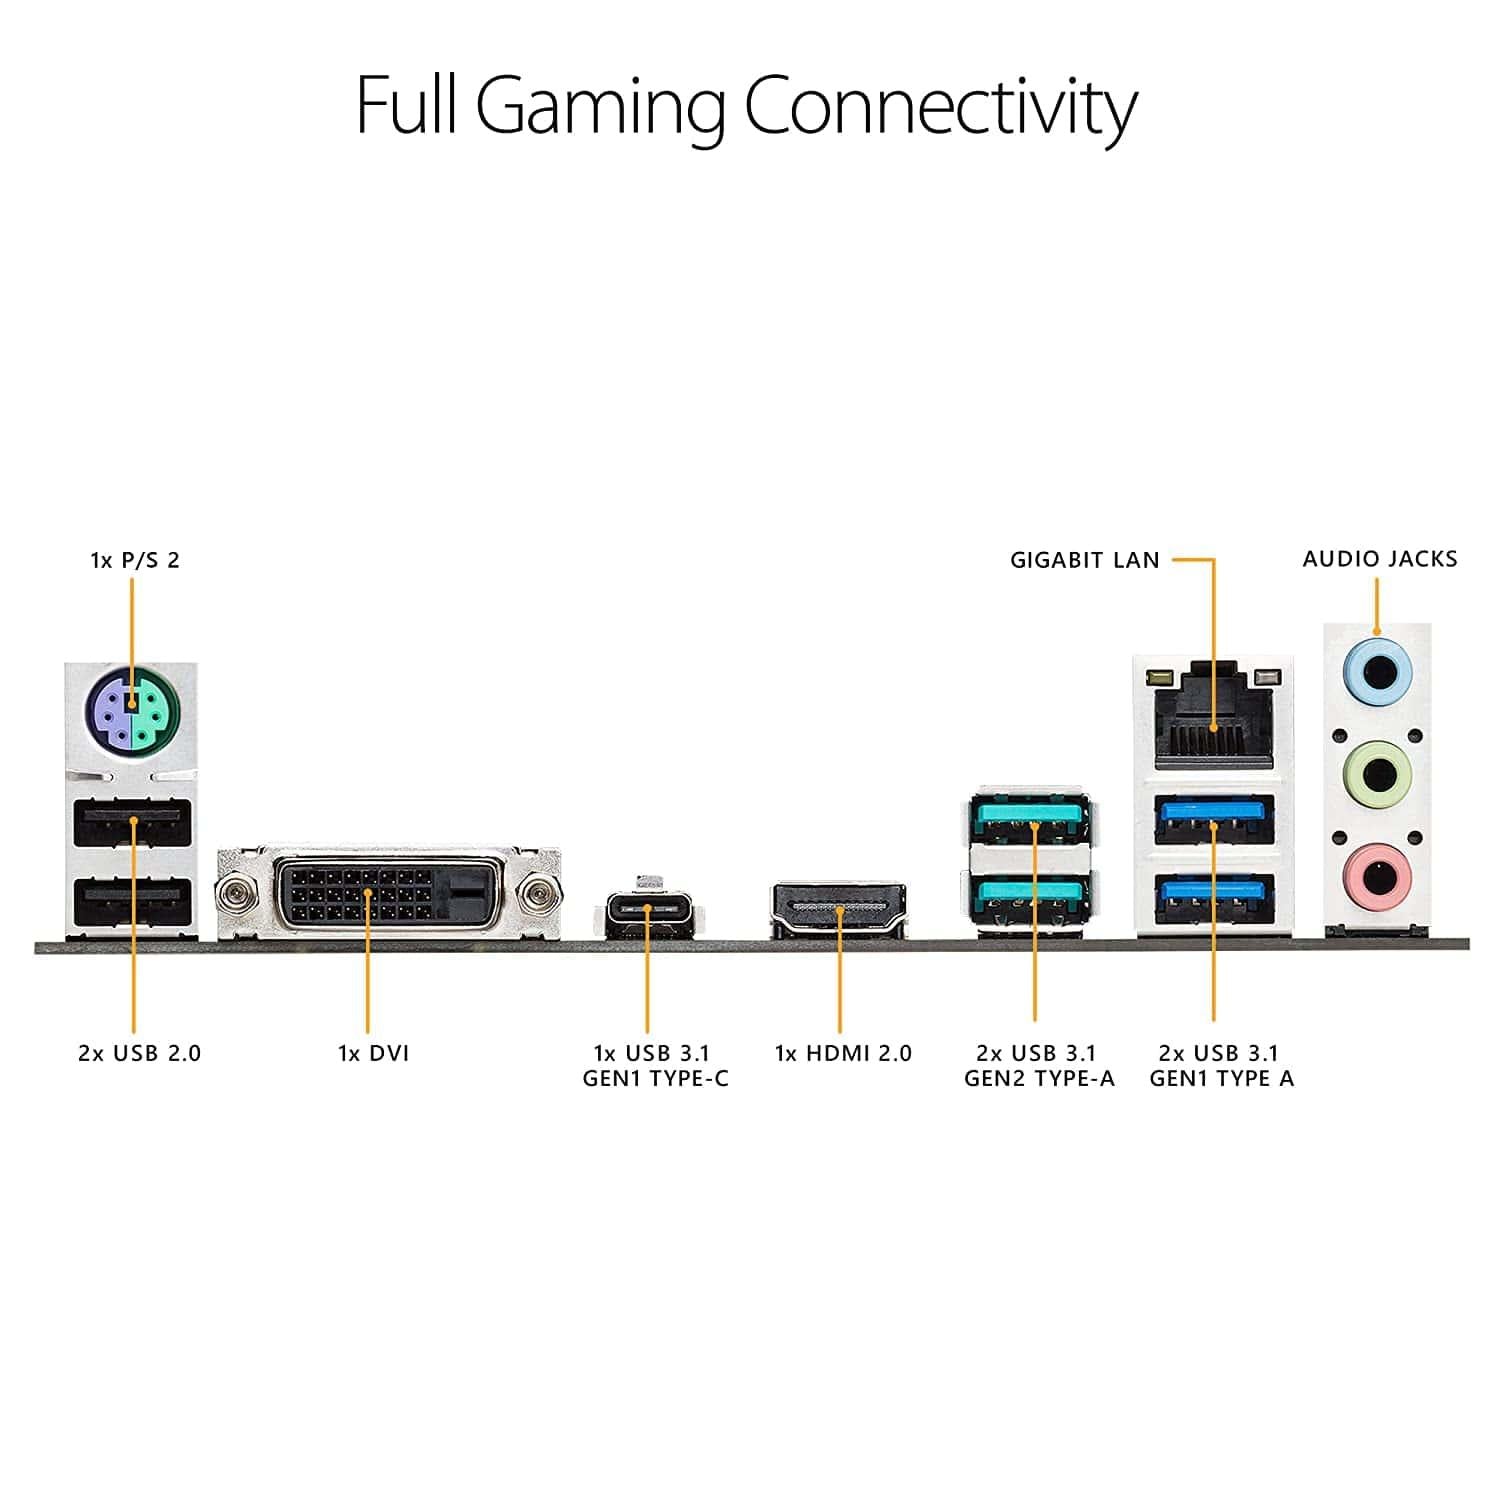 Asus TUF B450 Plus Gaming Motherboard-Mother Boards-dealsplant